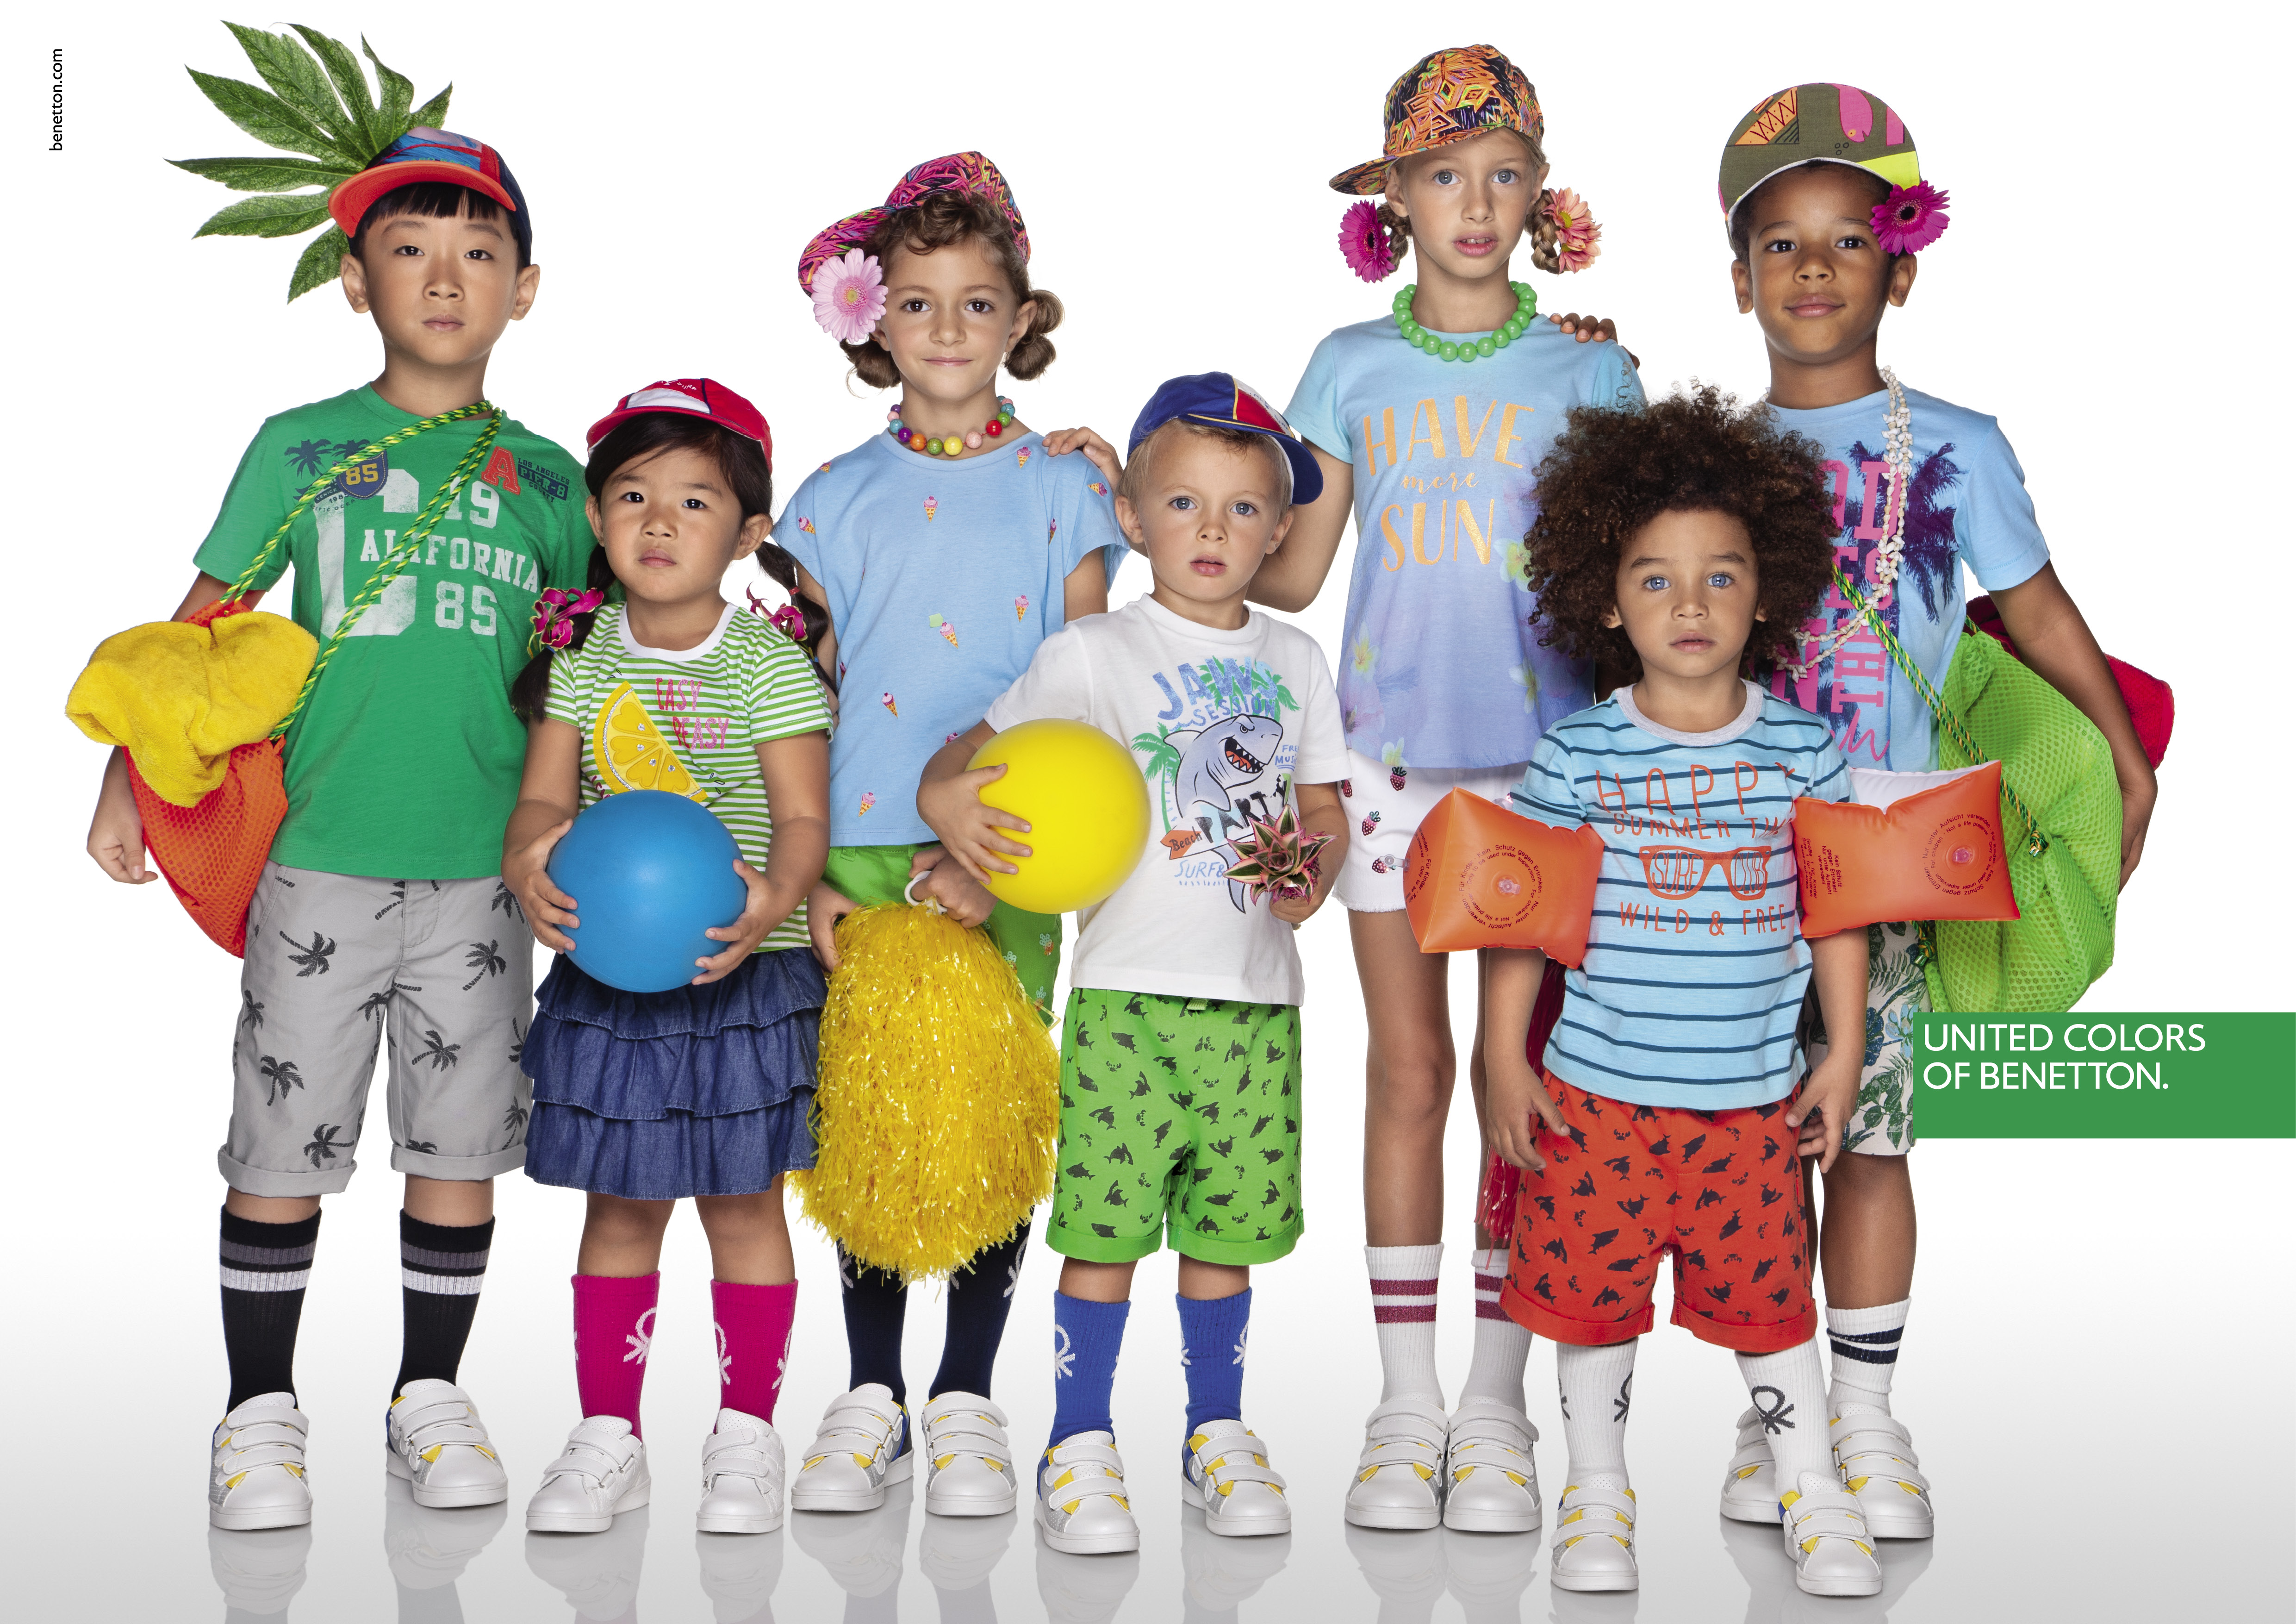 Live united colors. United Colors of Benetton детская одежда. Одежда United Colors of Benetton интернет. United Colors of Benetton детские лукбуки. United Colors of Benetton дети.